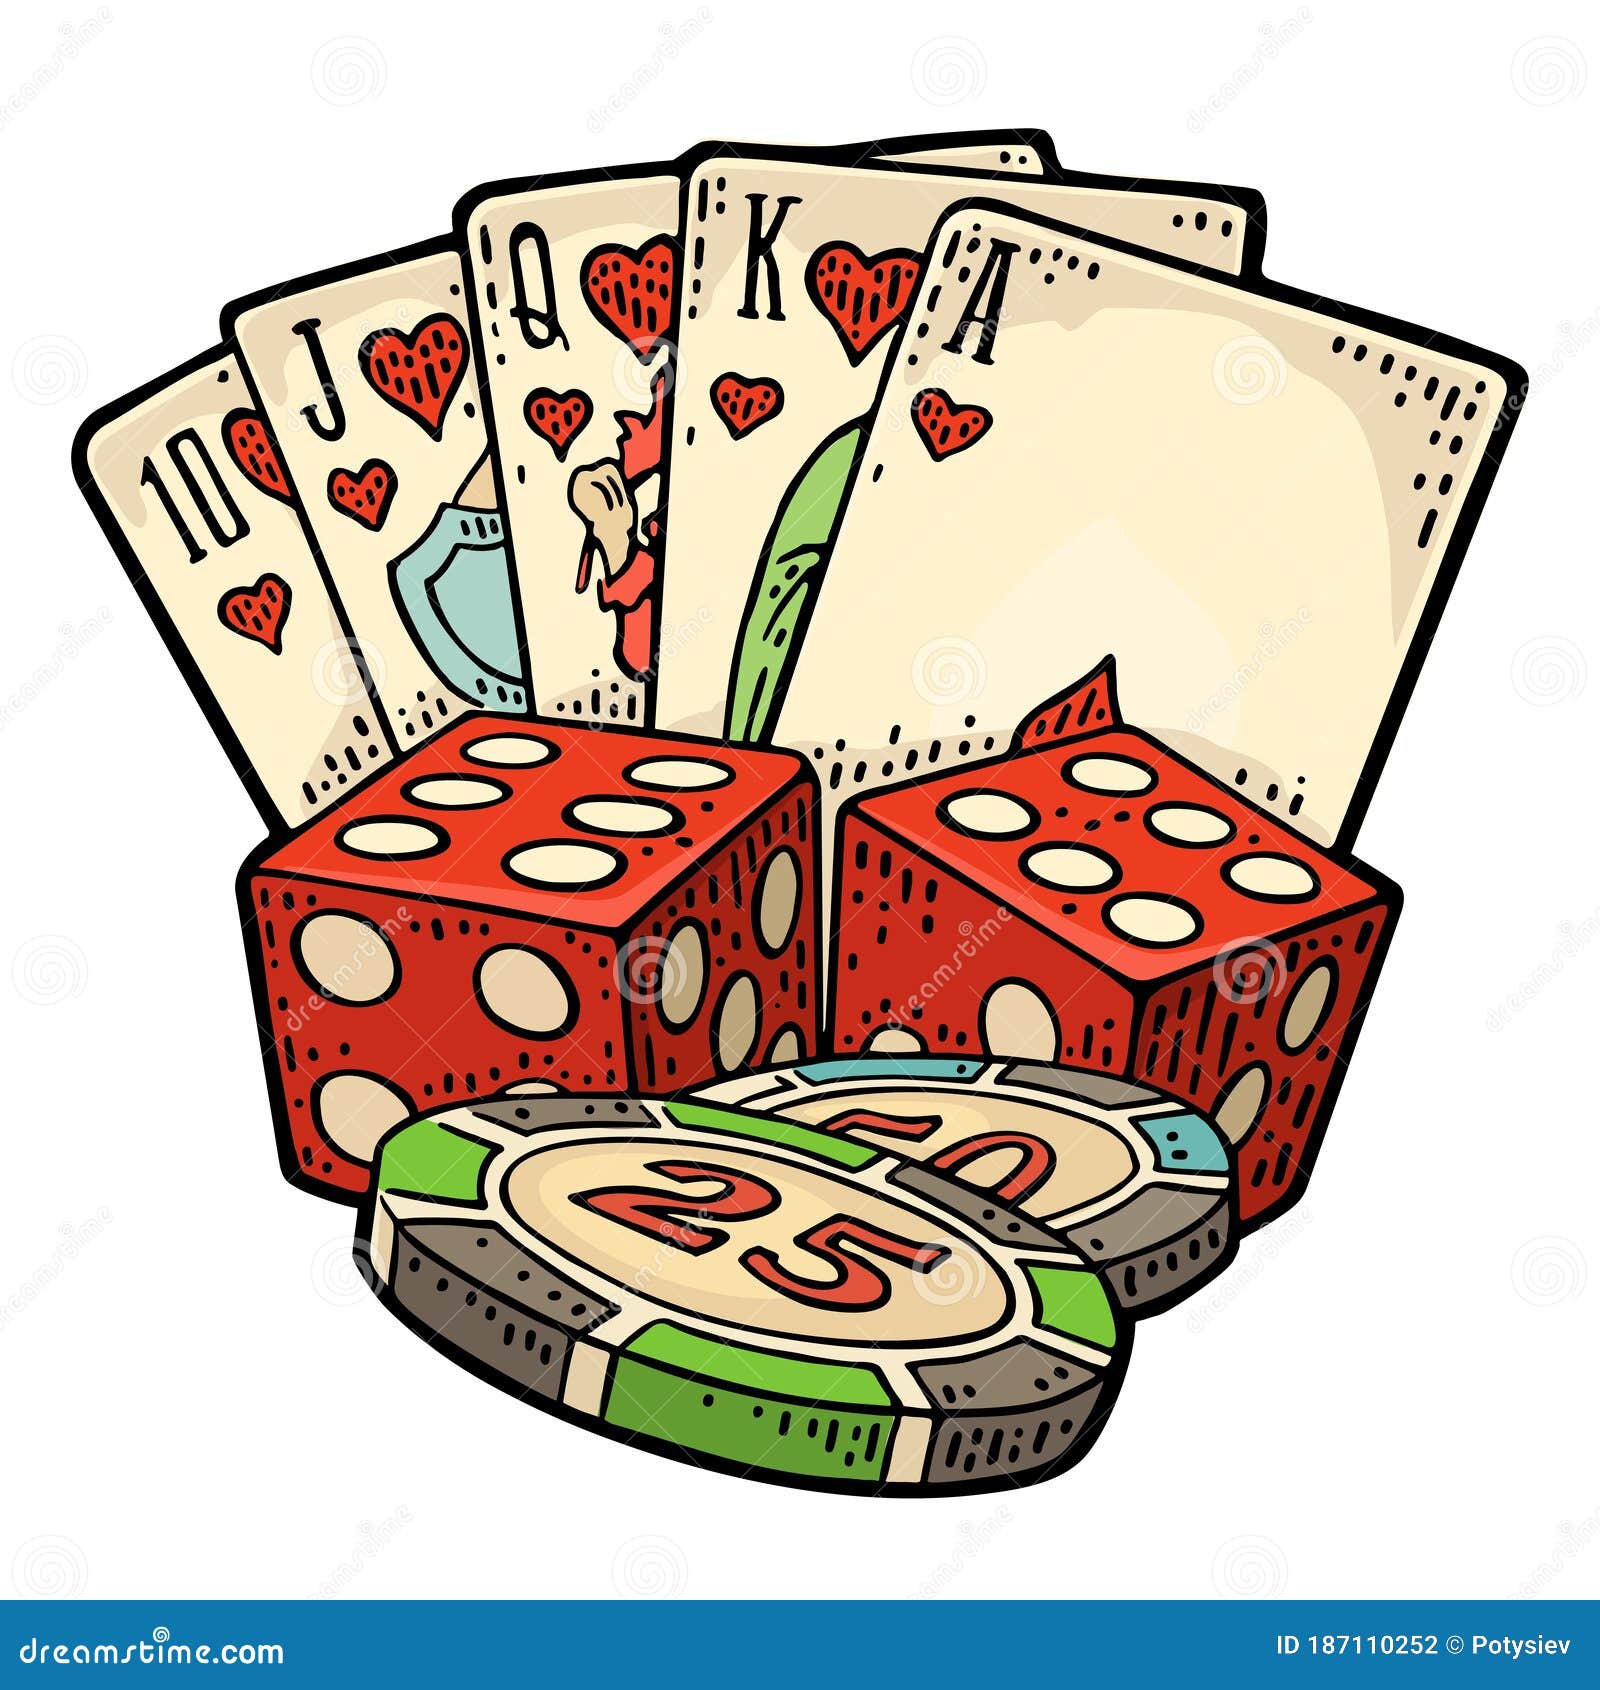 Metal Enamel Pin Badge Brooch Cards Playing Cards Full House Poker Gamble Casino